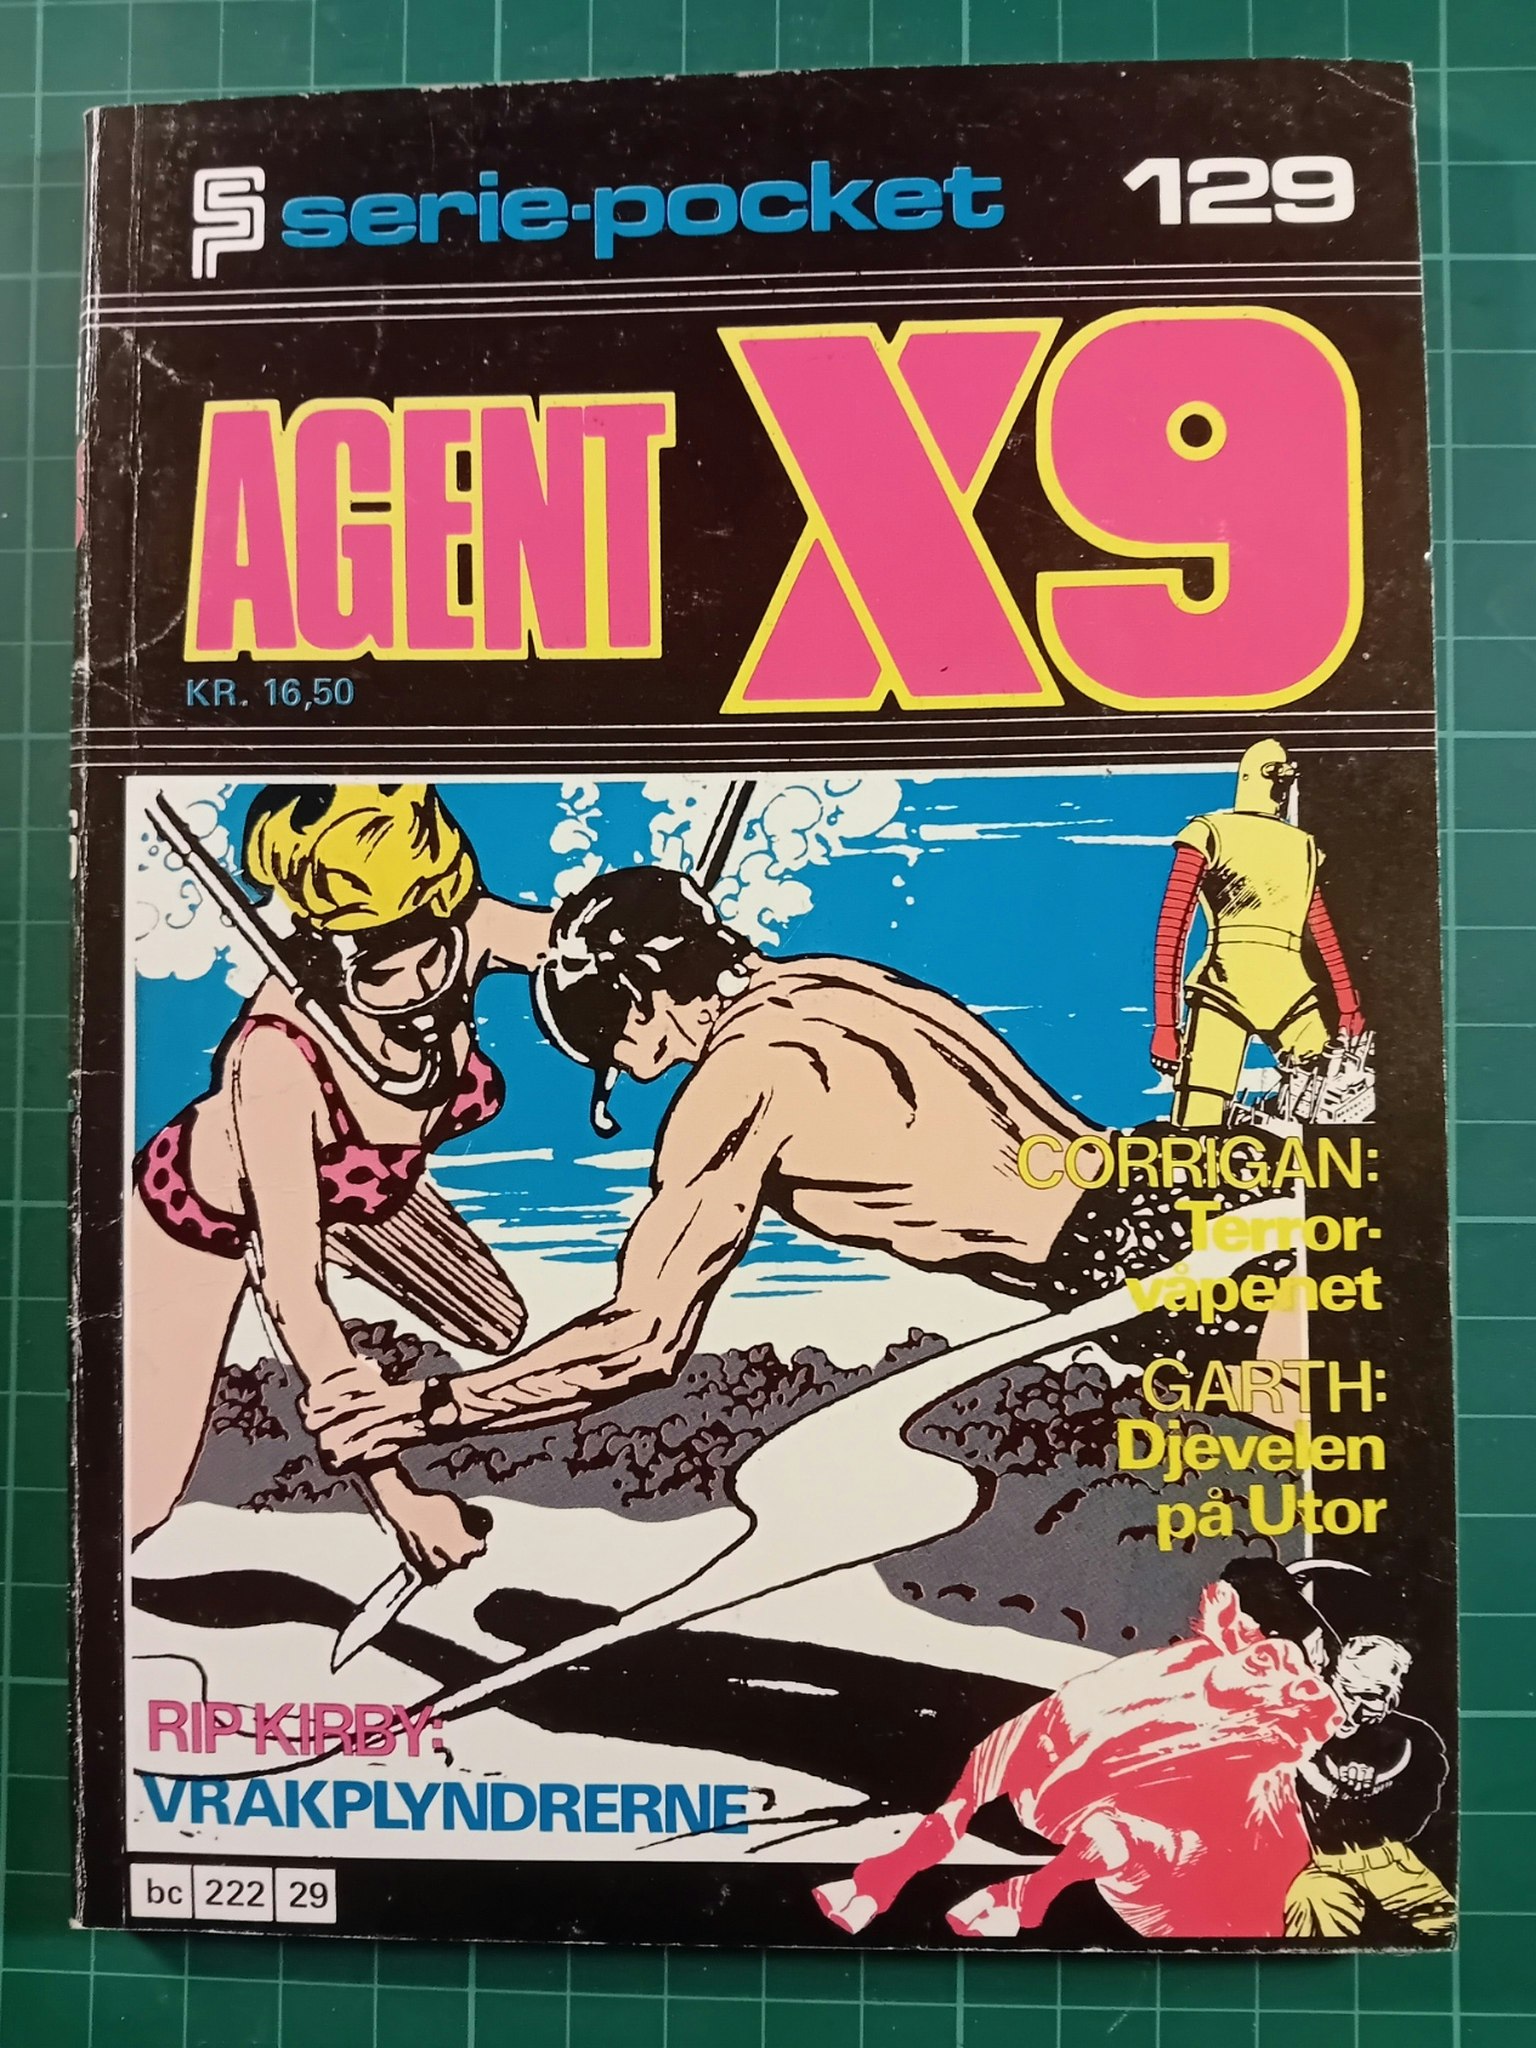 Serie-pocket 129 : Agent X9